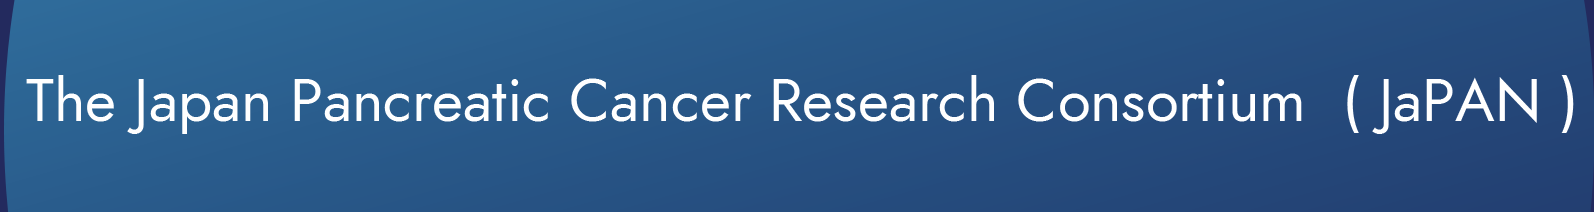 The Japan Pancreatic Cancer Research Consortium (JaPAN)